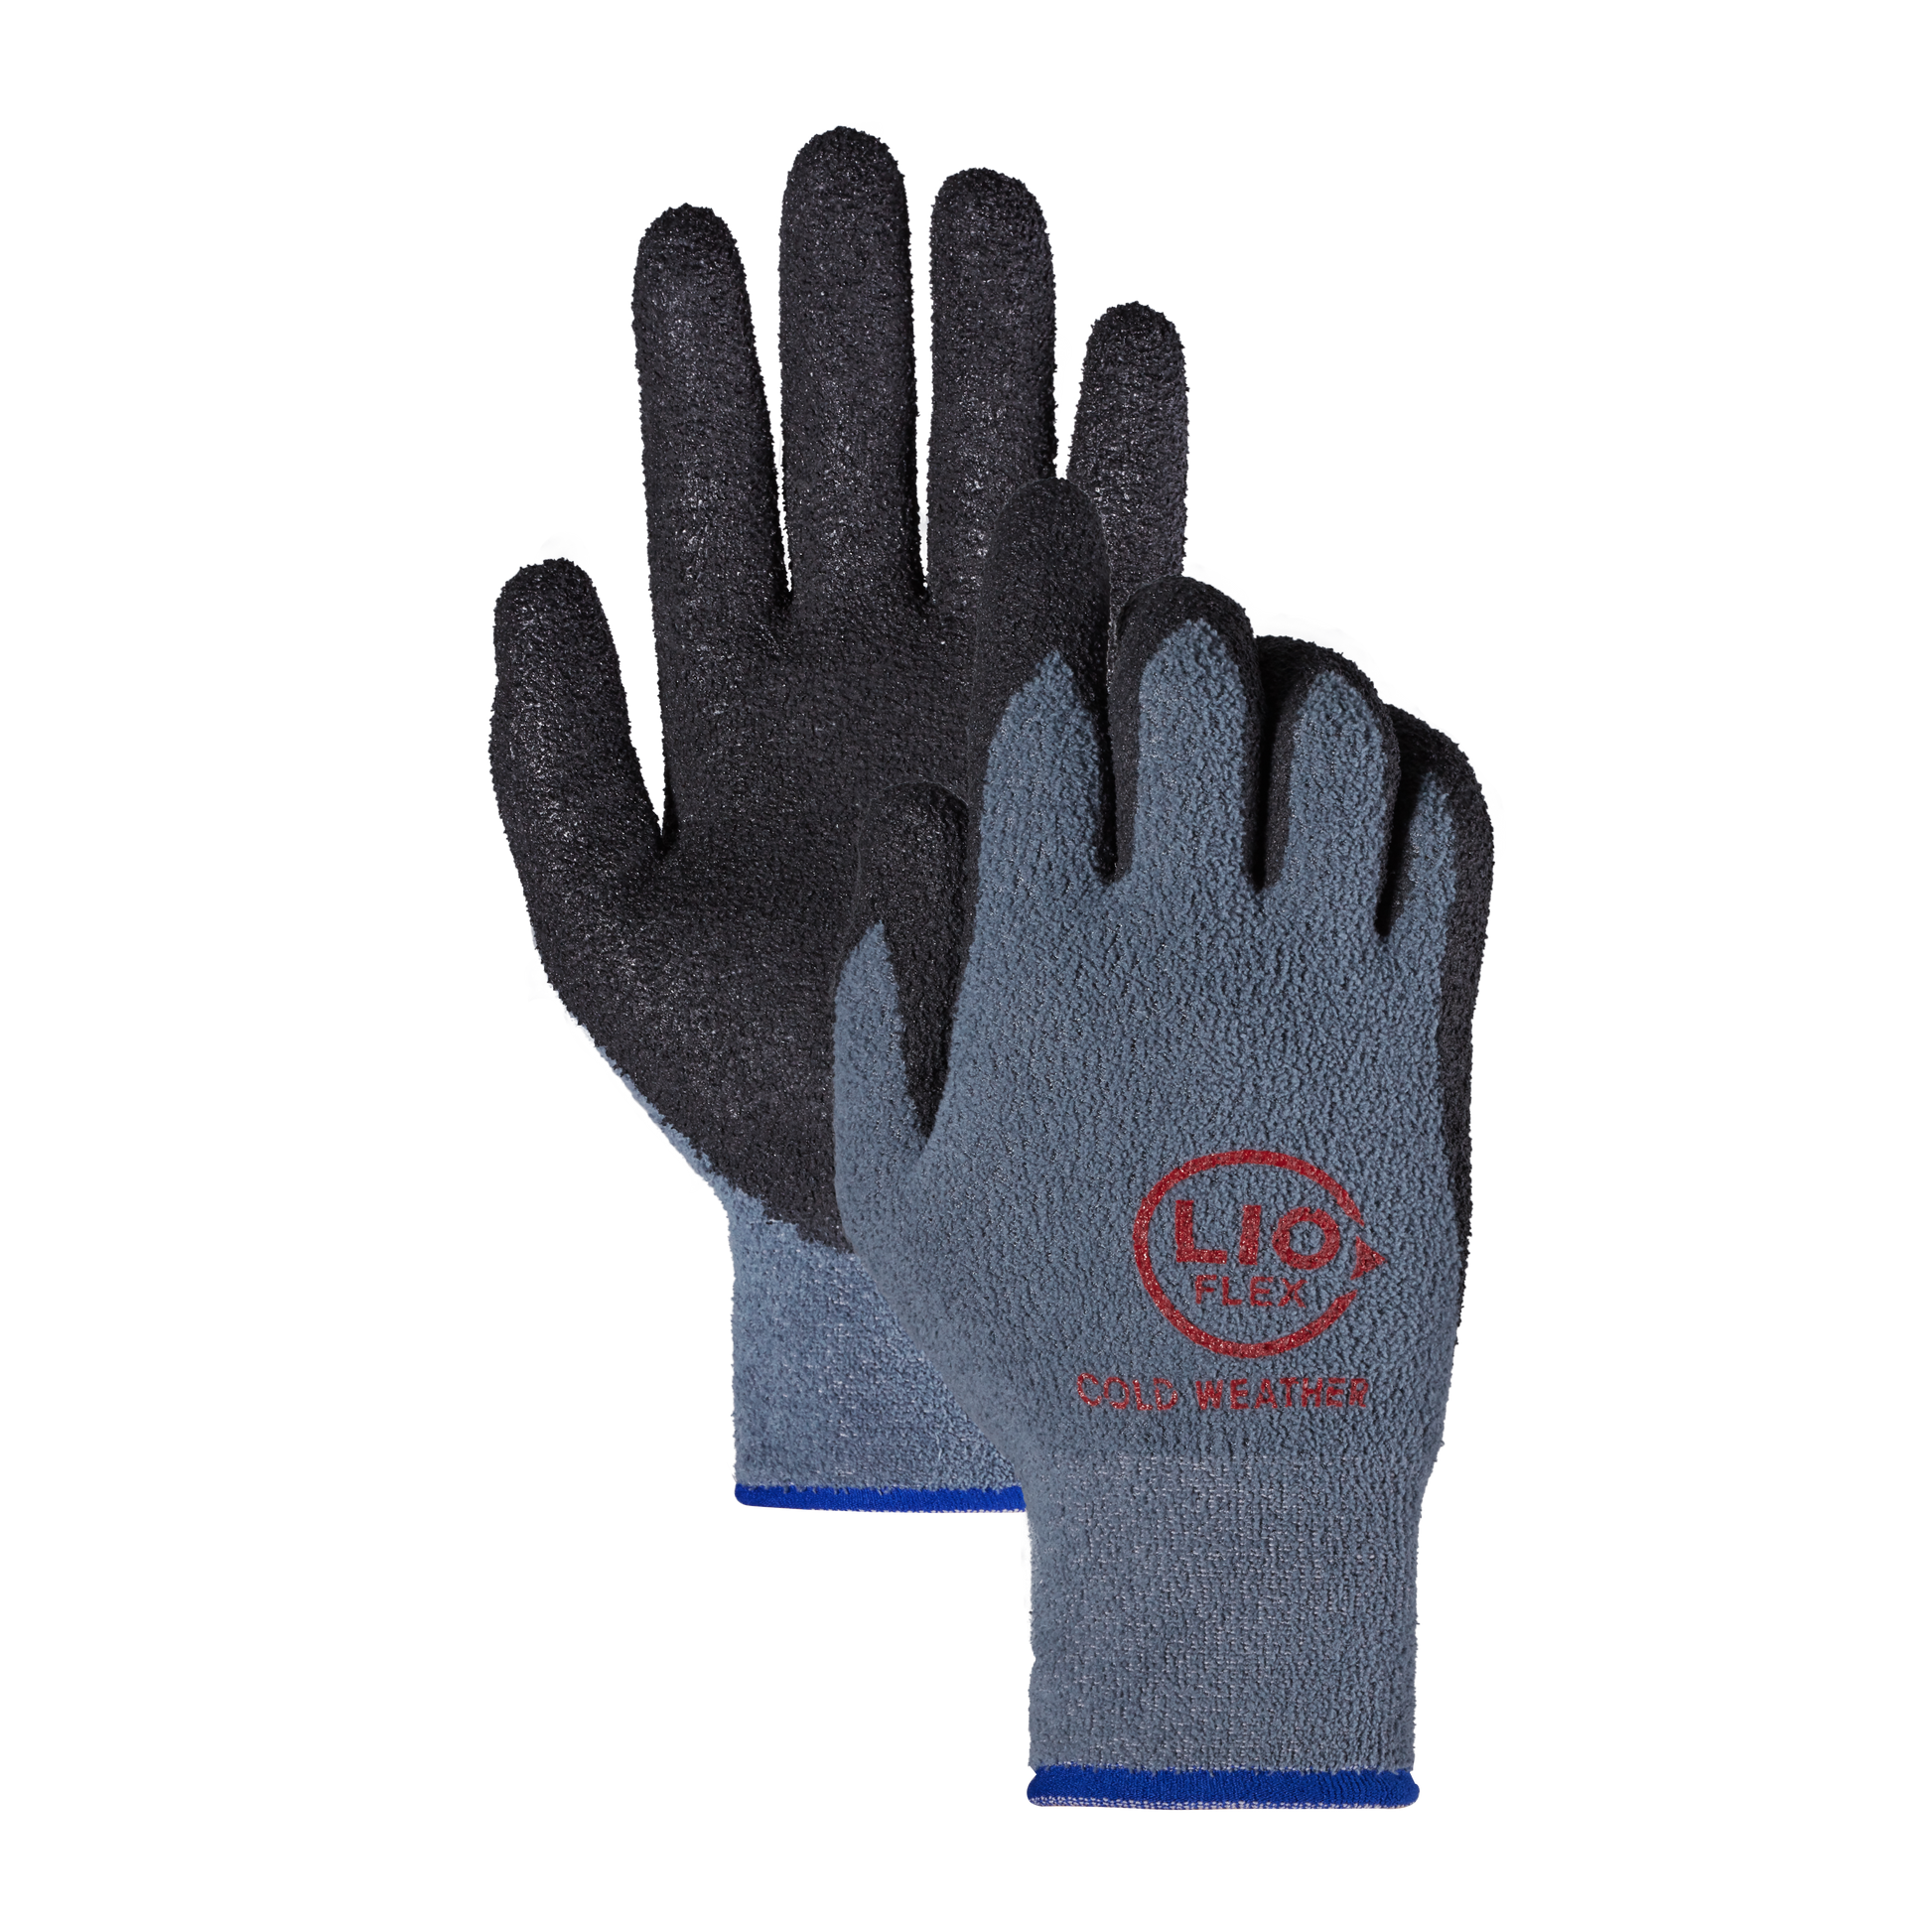 LIO FLEX Multi Purpose NBR Foam Coated Work Gloves DMF Free Non-Slip